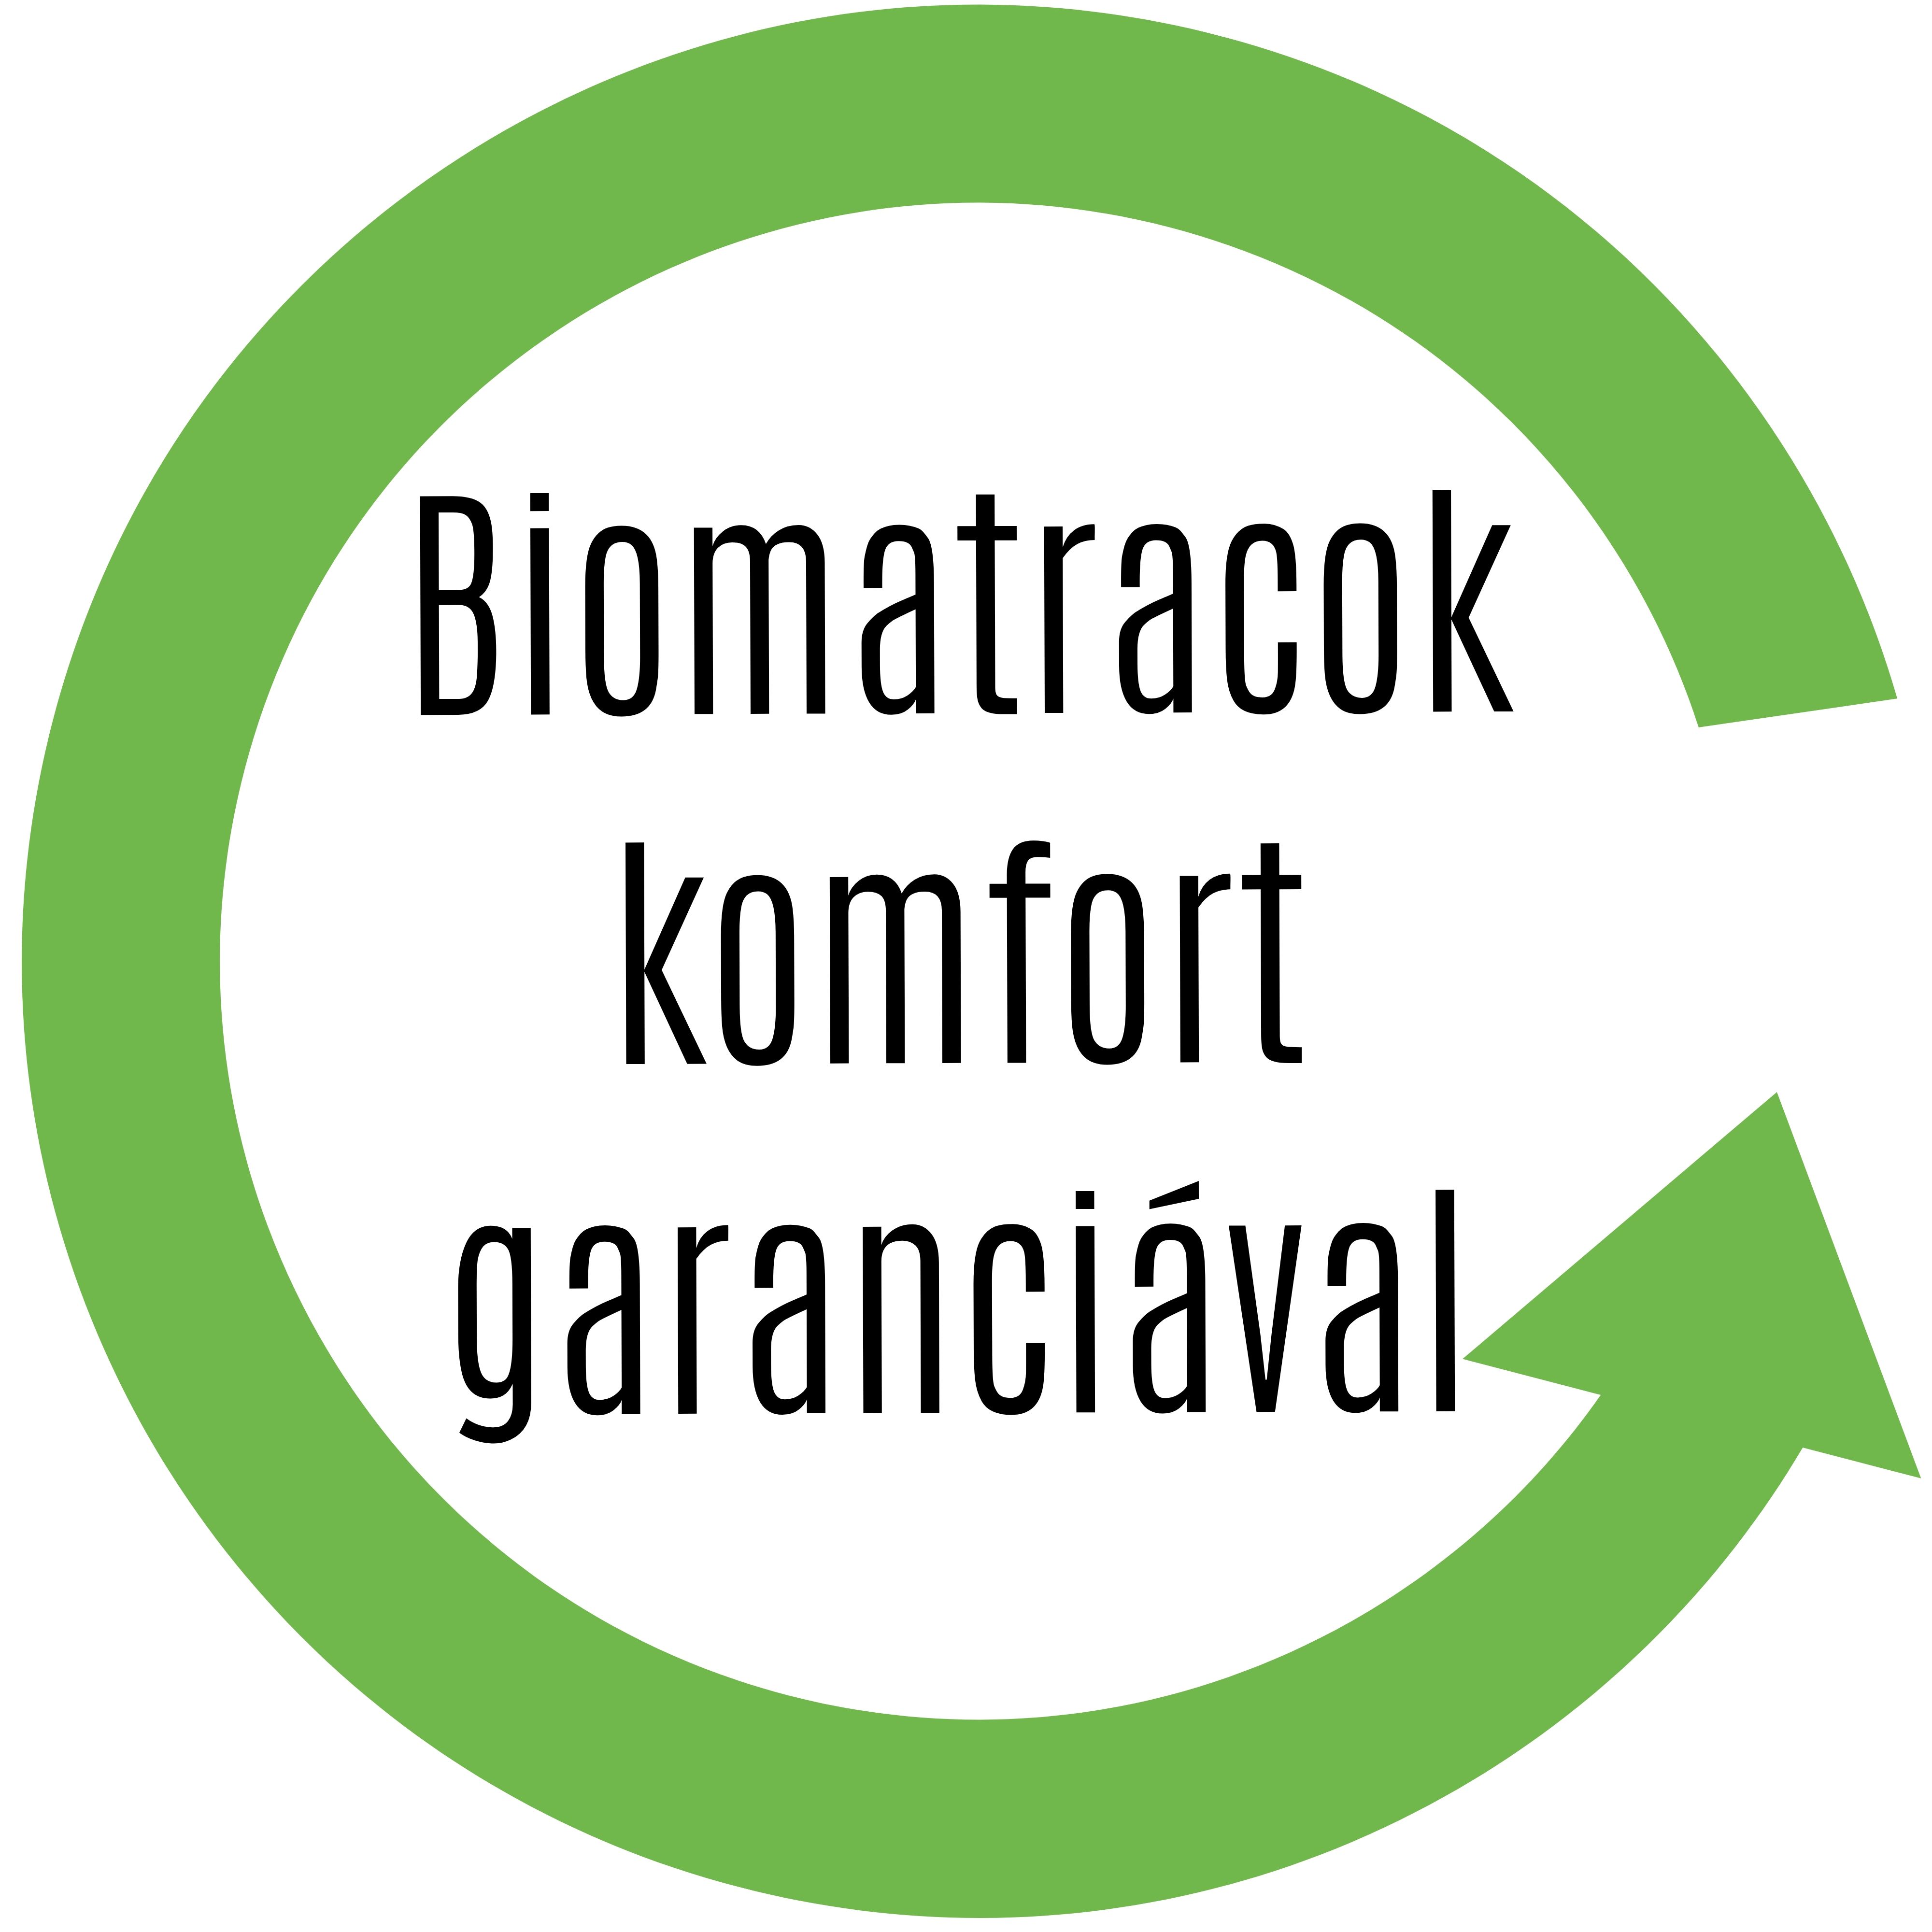 Biomatracok komfort garanciával - matrac.hu